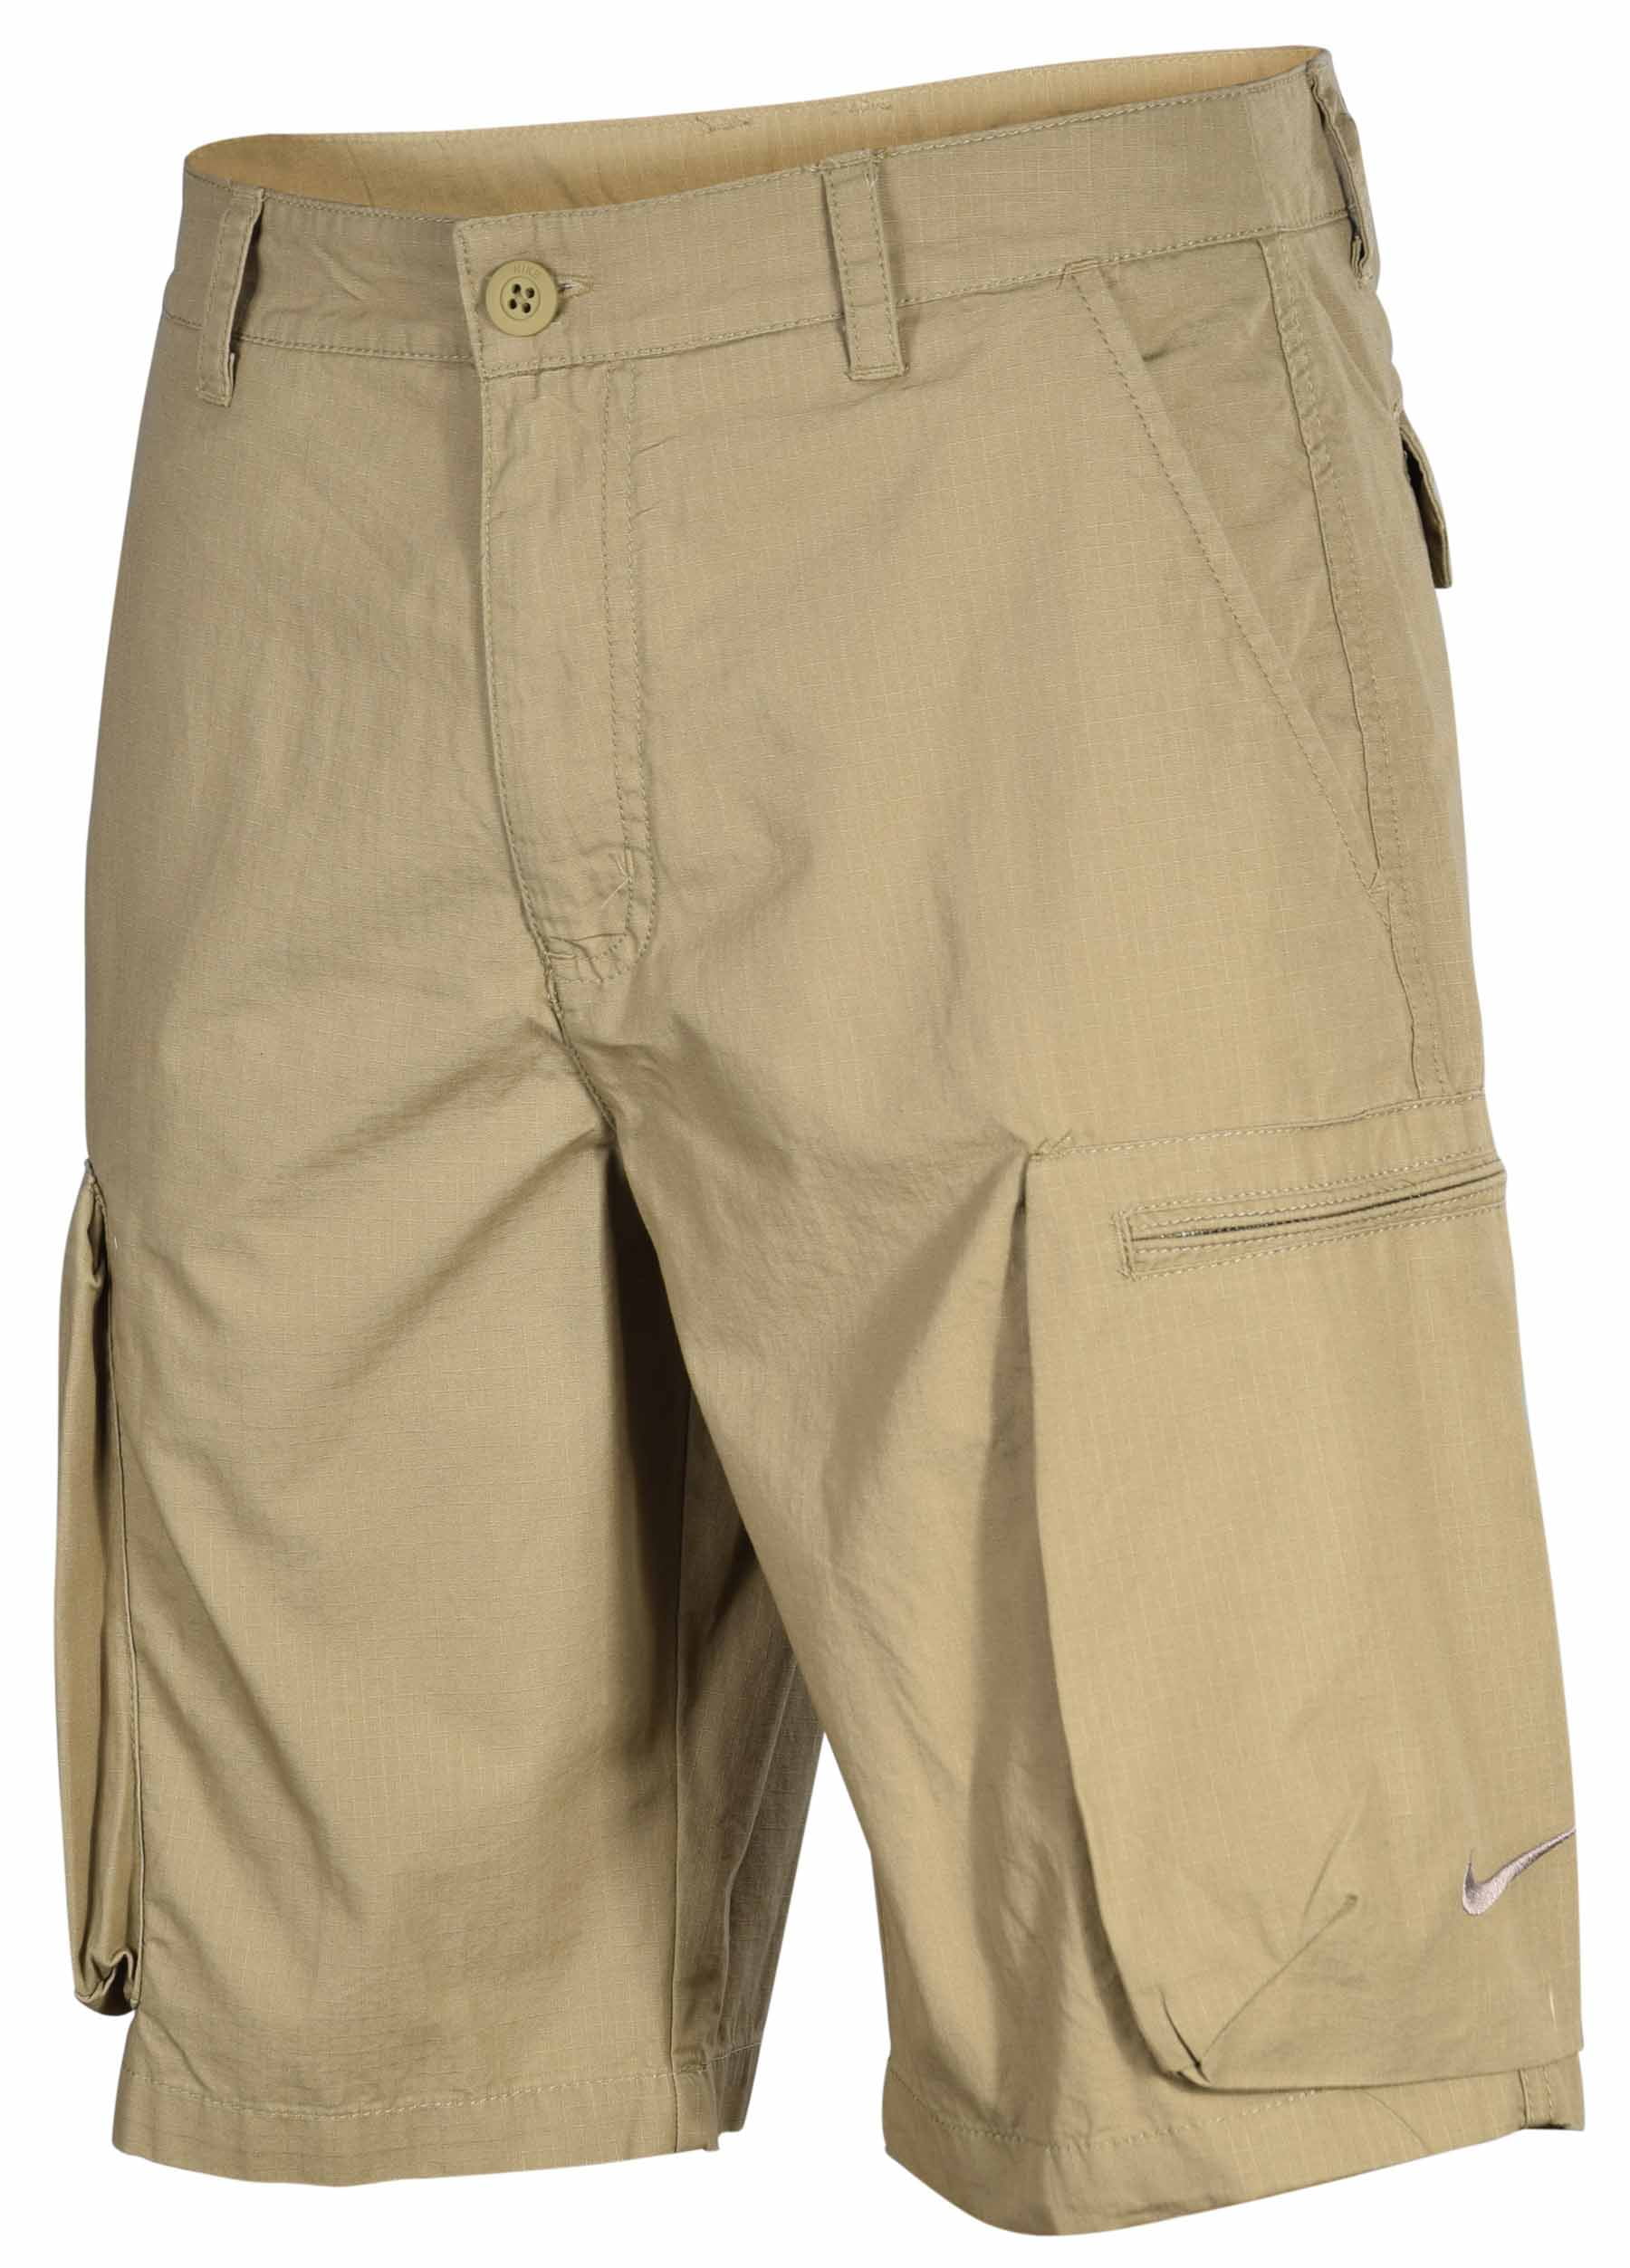 Nike Men's Woven Cargo Shorts - Walmart.com